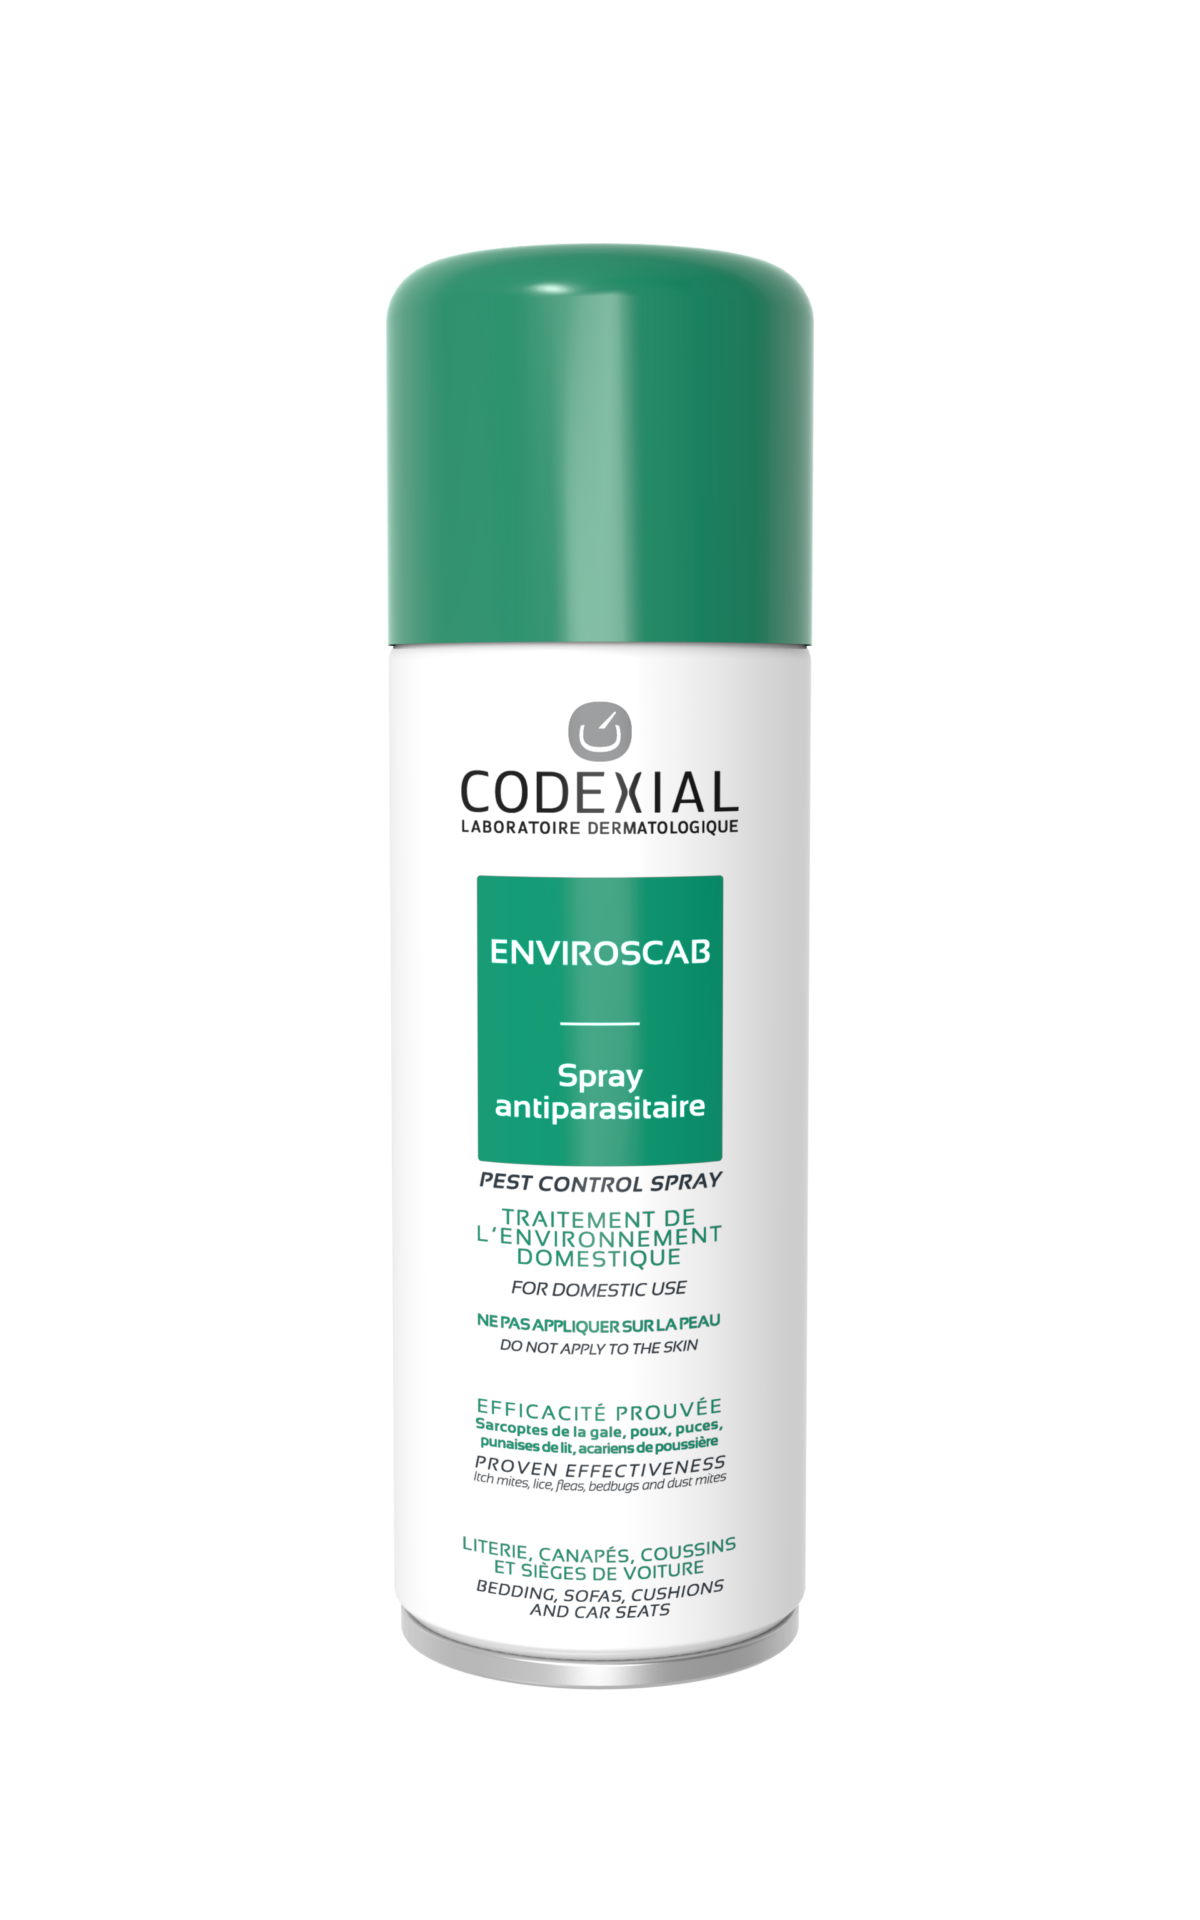 Enviroscab - Spray antiparasitaire - Codexial Dermatologie